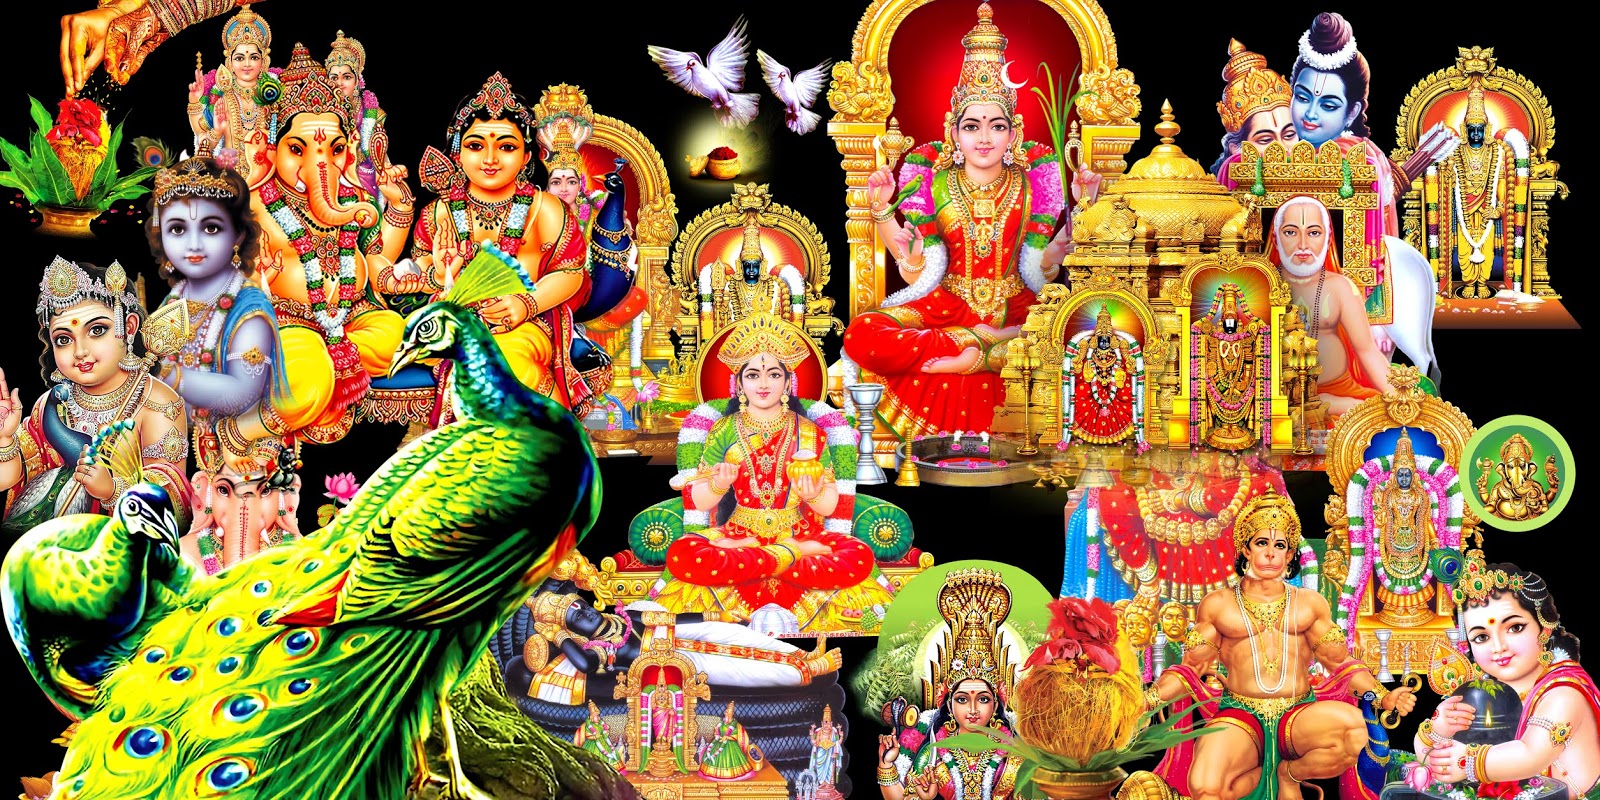 God Psd Image Free Download - Kumaran Network